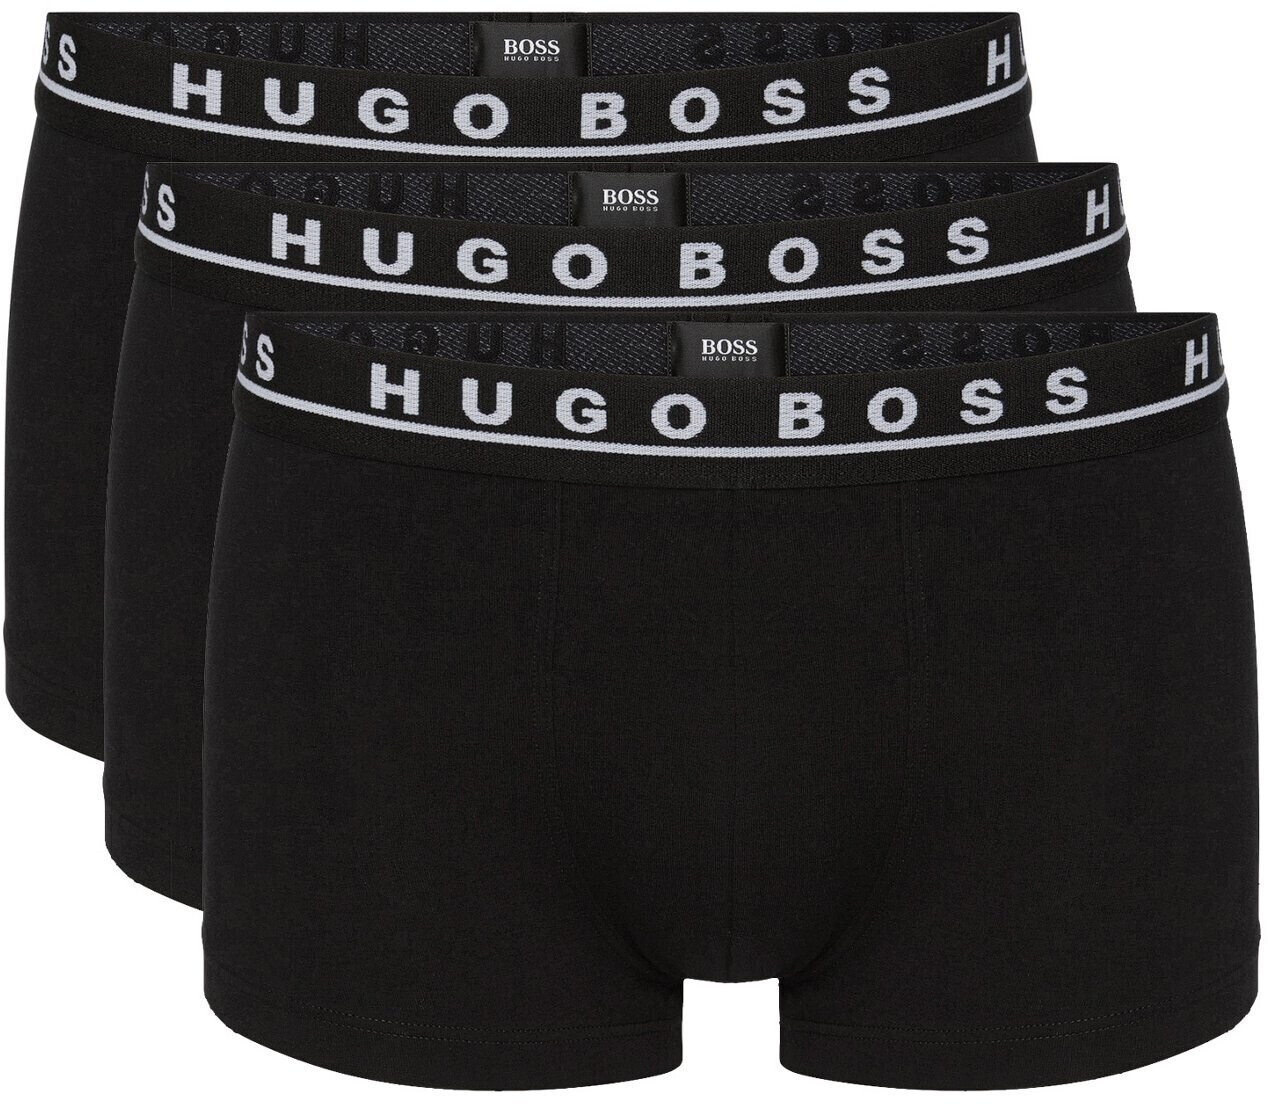 Farbwahl HUGO BOSS Boxershorts 3er Pack Shorts Low Rise Trunks